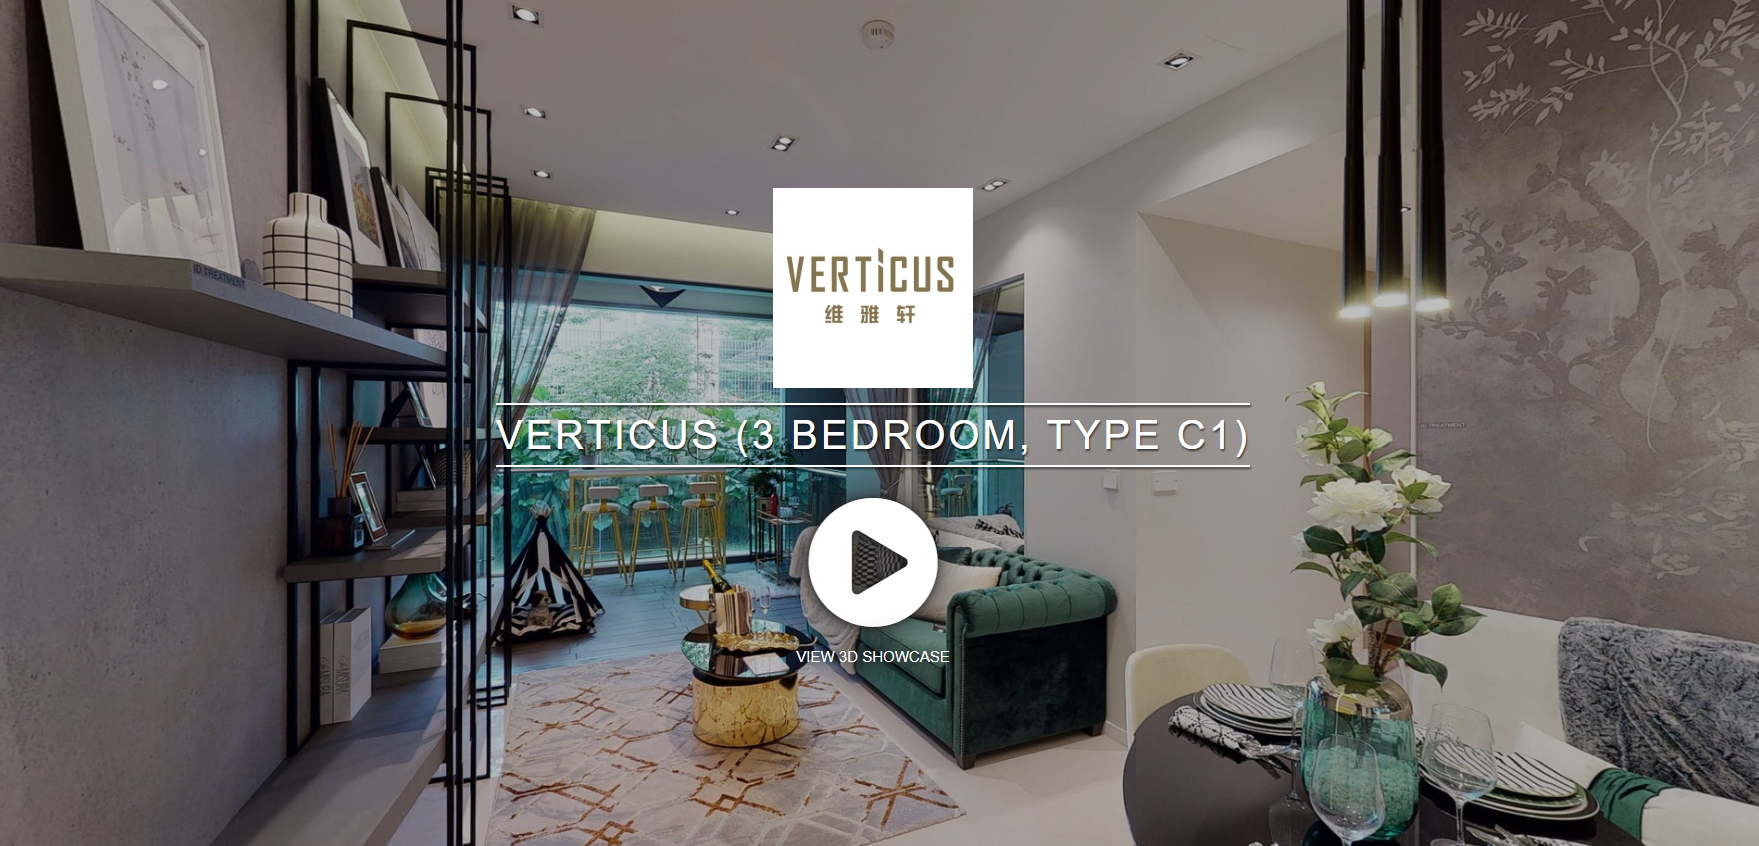 3D Virtual Tour of Verticus 3 Bedroom Showflat, Type C1